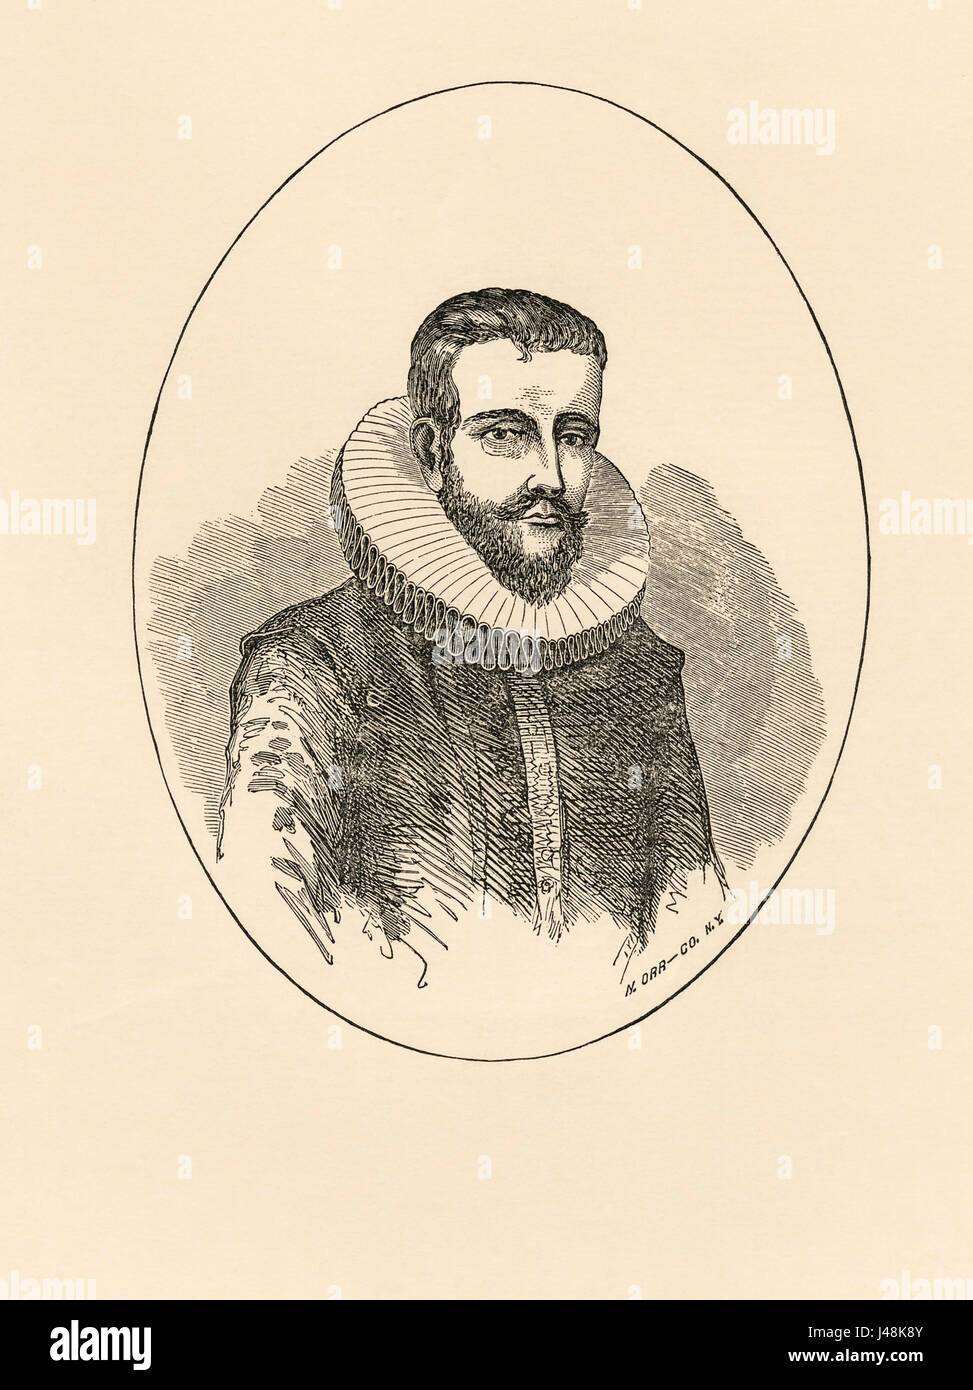 Henry Hudson, c.1565-1570 - 1611.  English explorer and navigator. Stock Photo